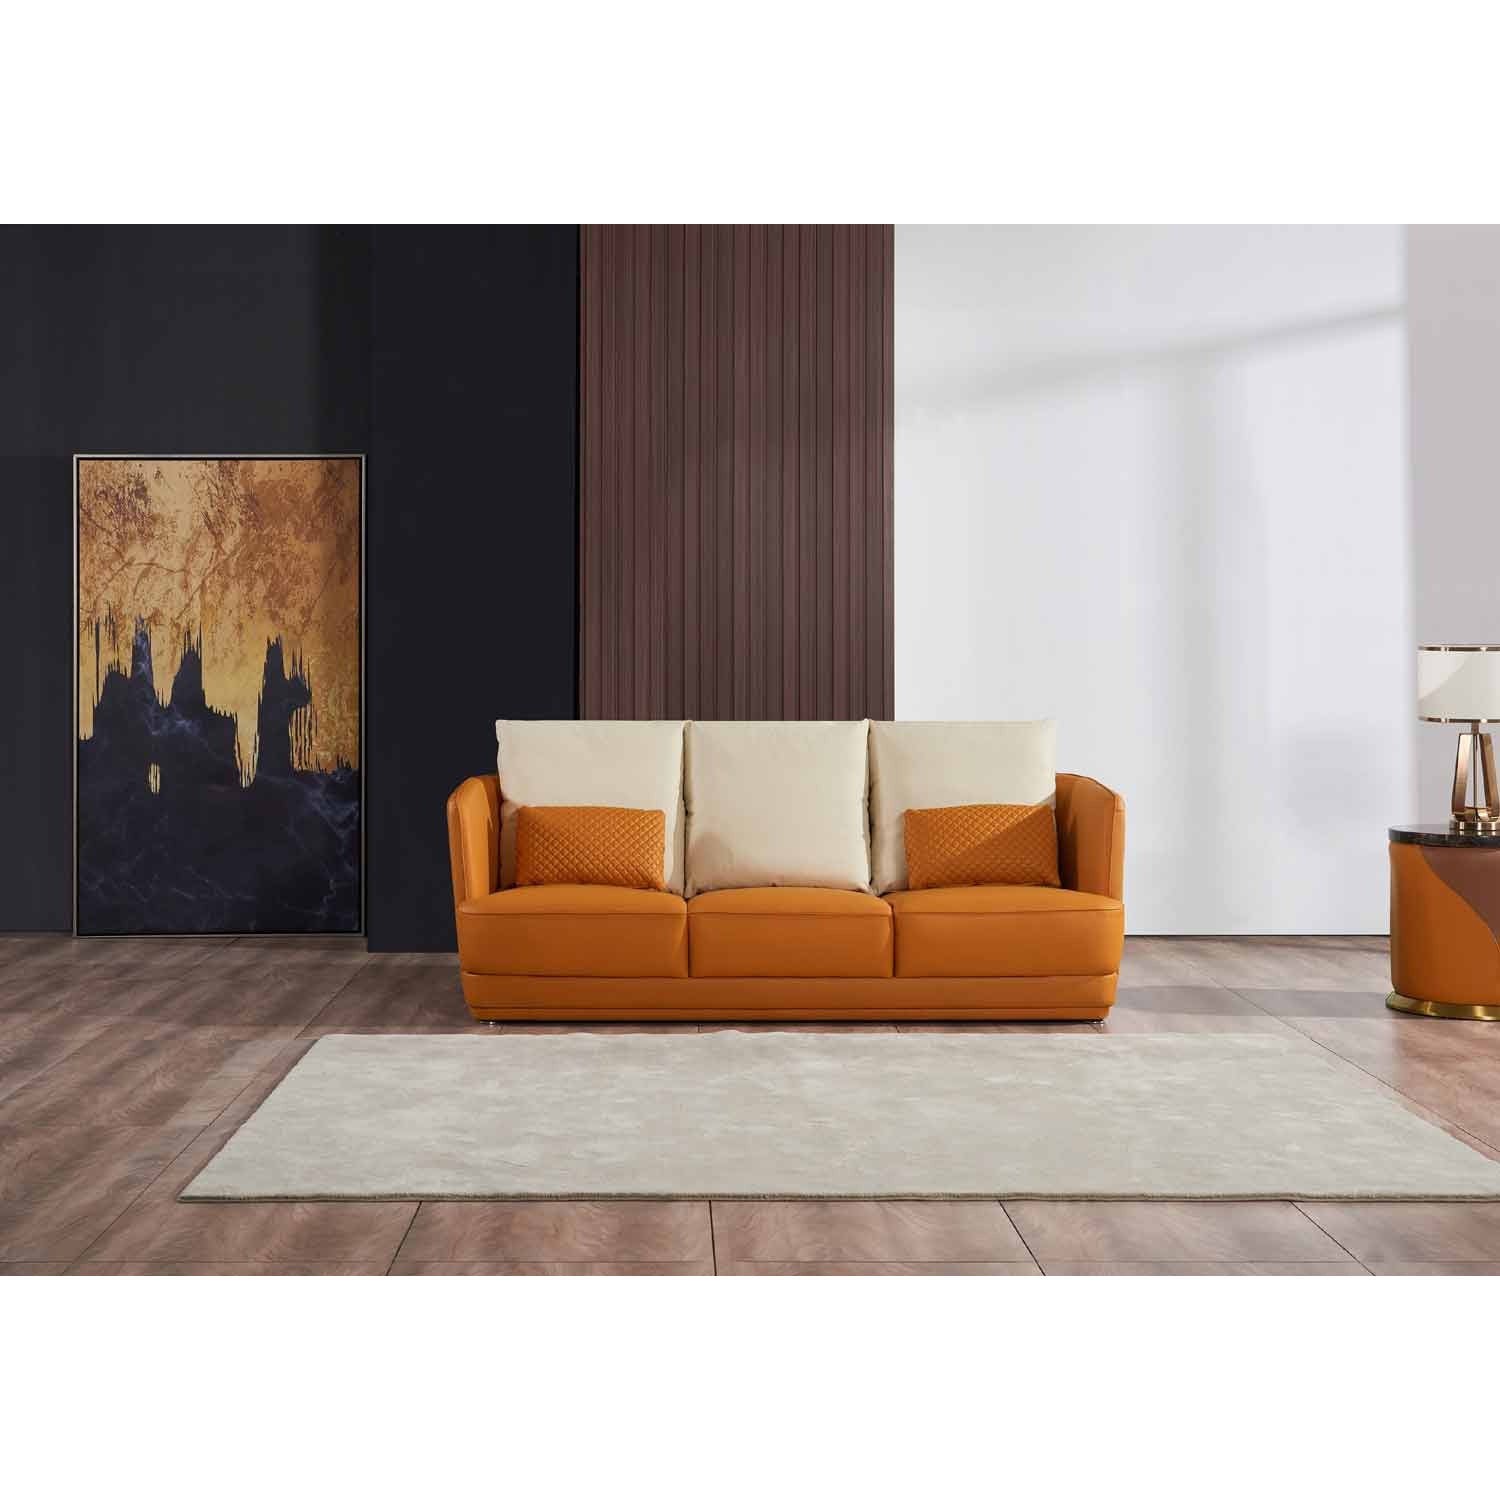 European Furniture - Glamour Sofa in Orange-Brown - 51619-S - New Star Living